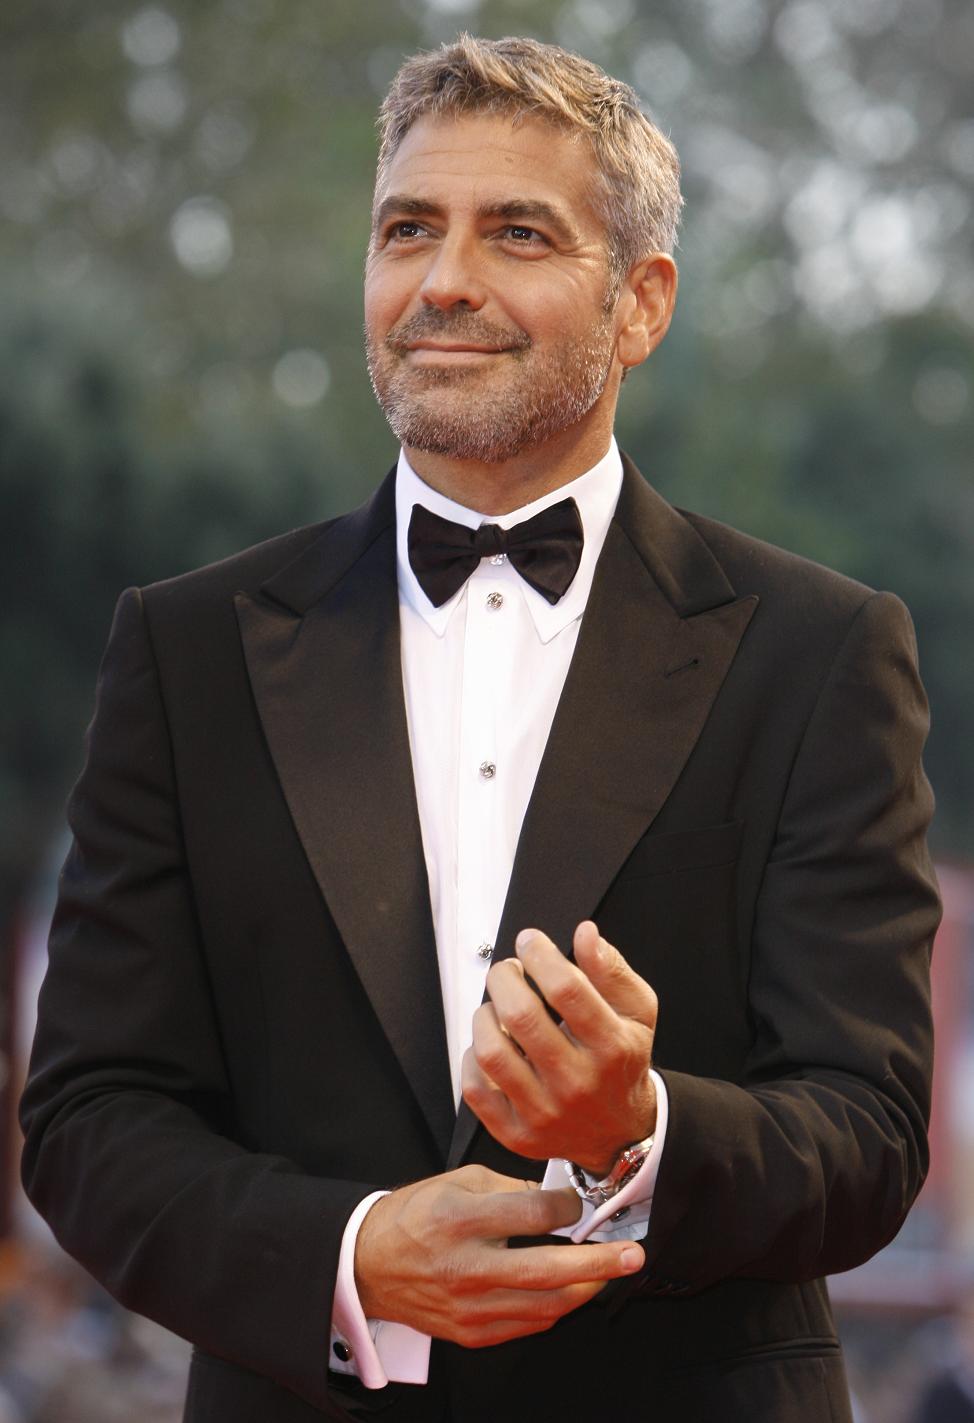 Być jak George Clooney